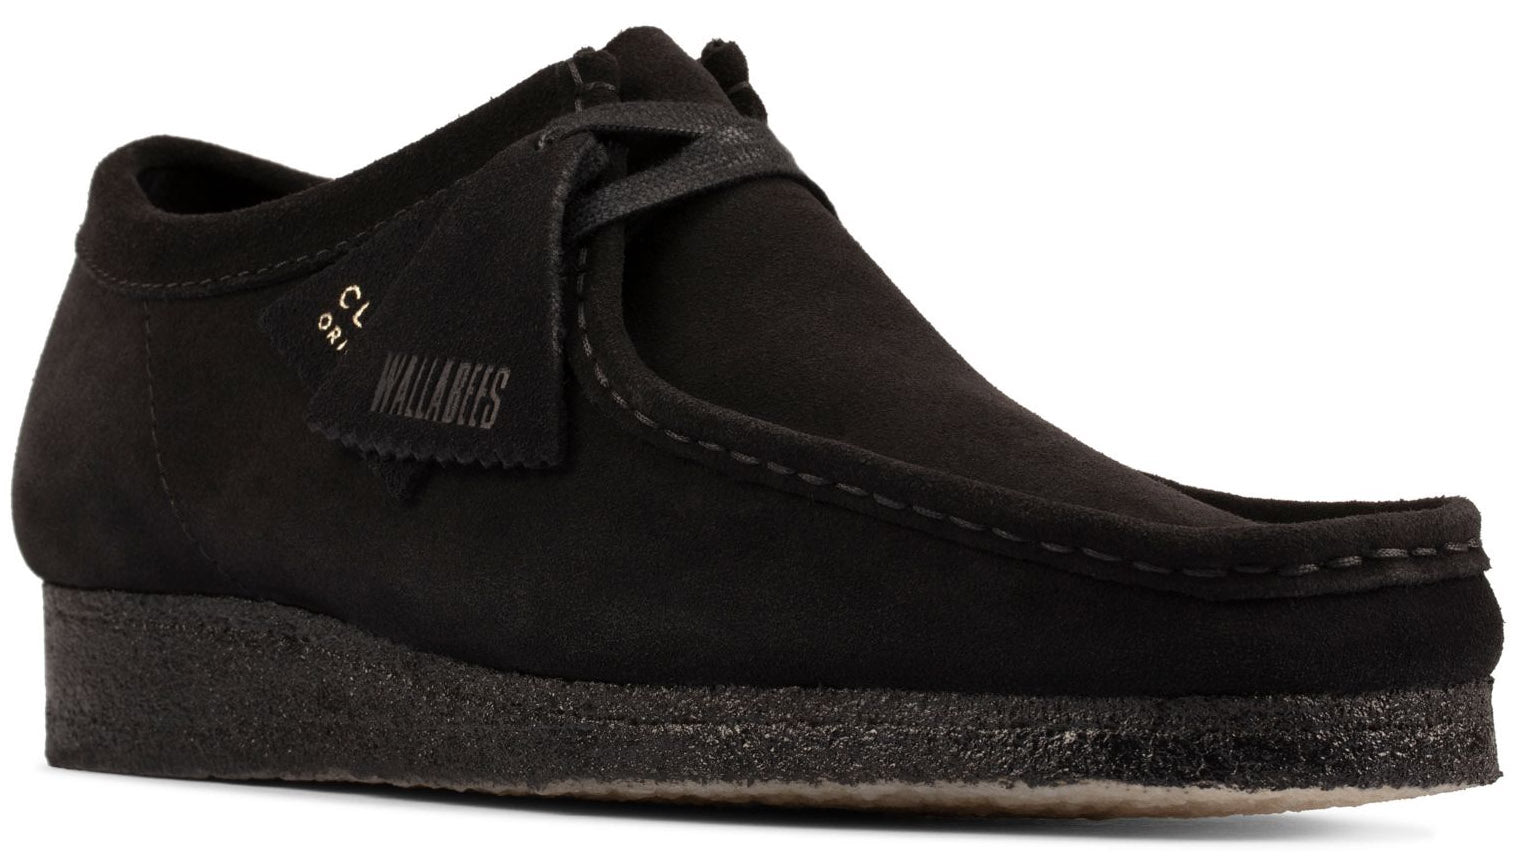 Clarks Originals Wallabee Suede Shoes - Men's